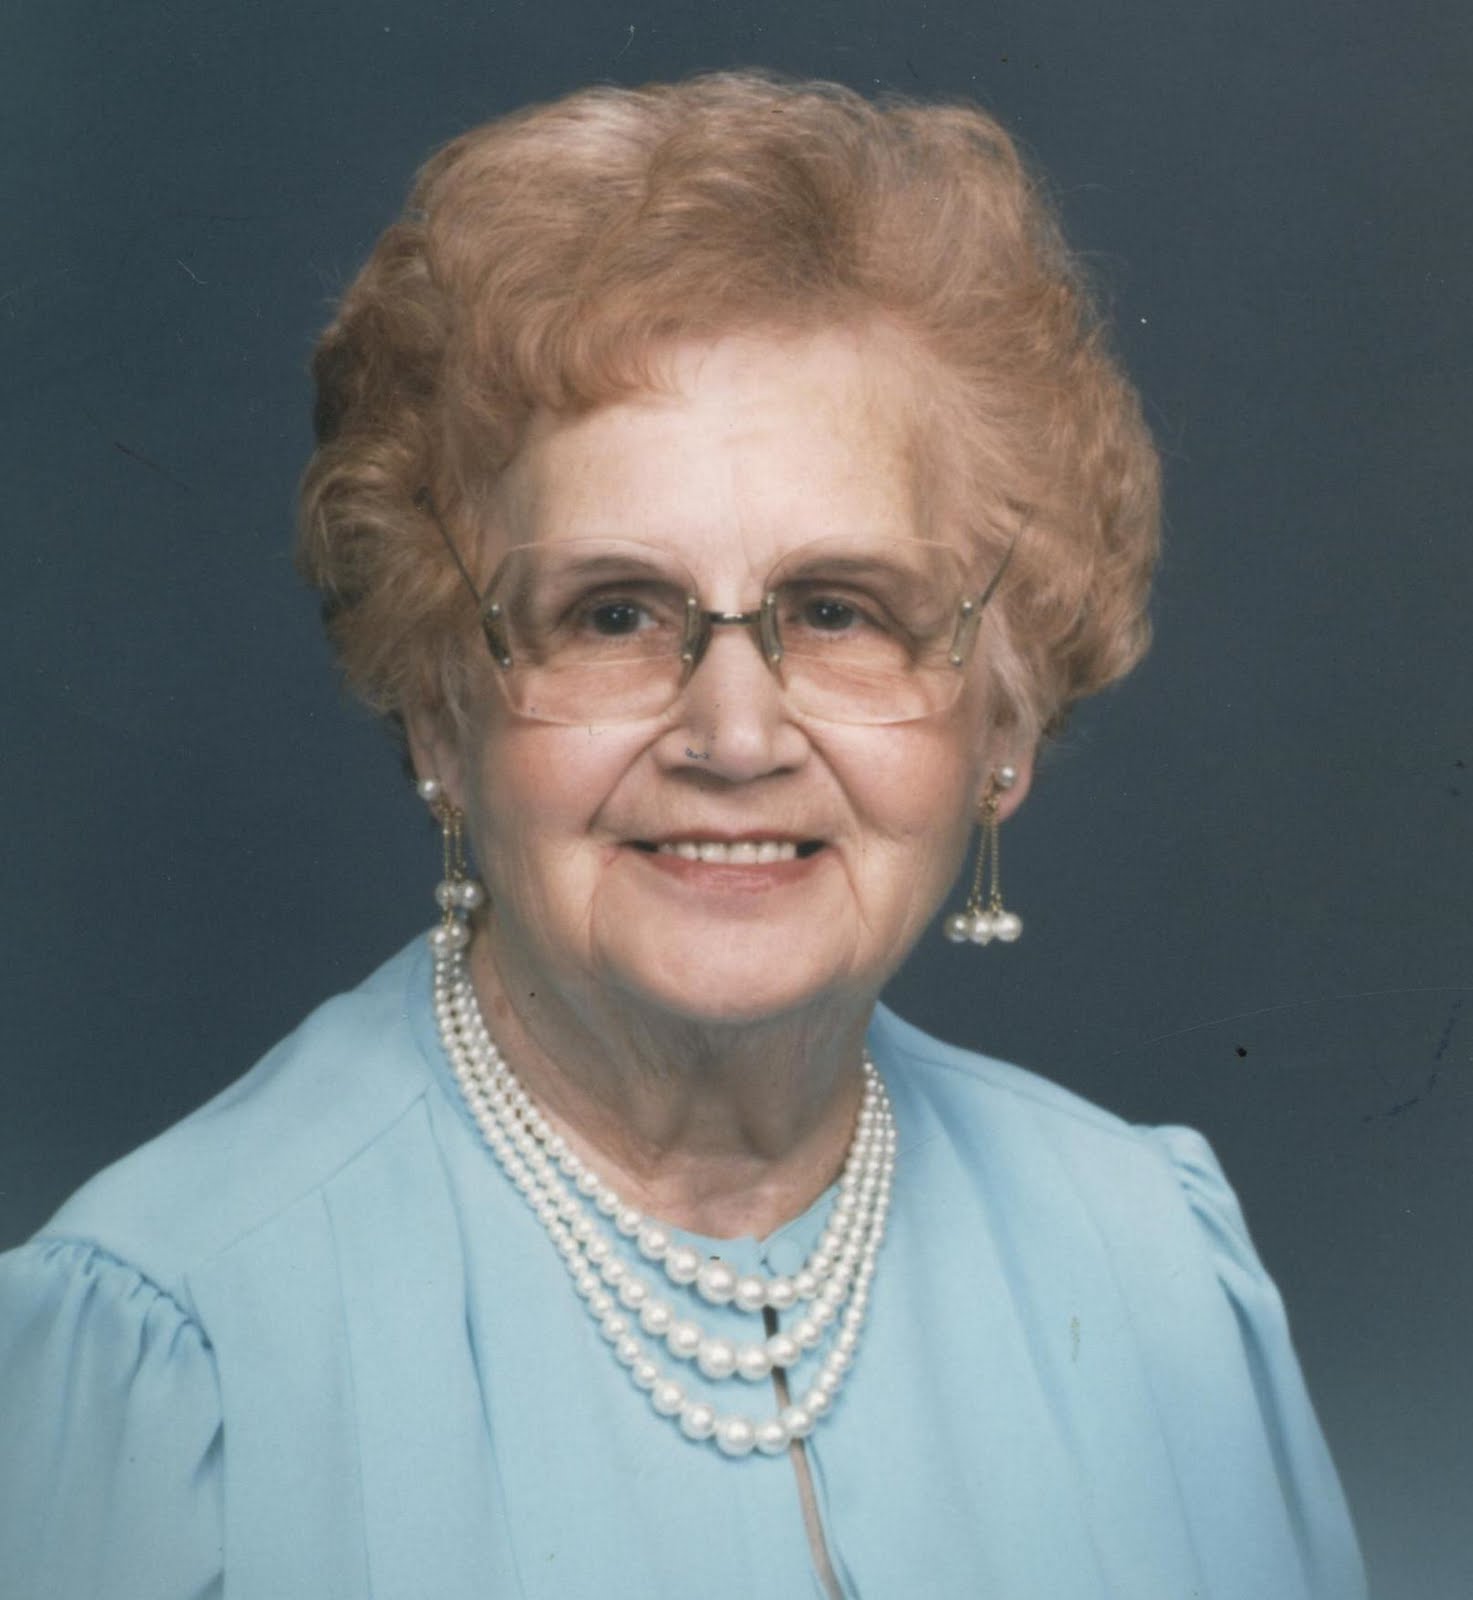 Obituary. My granny can